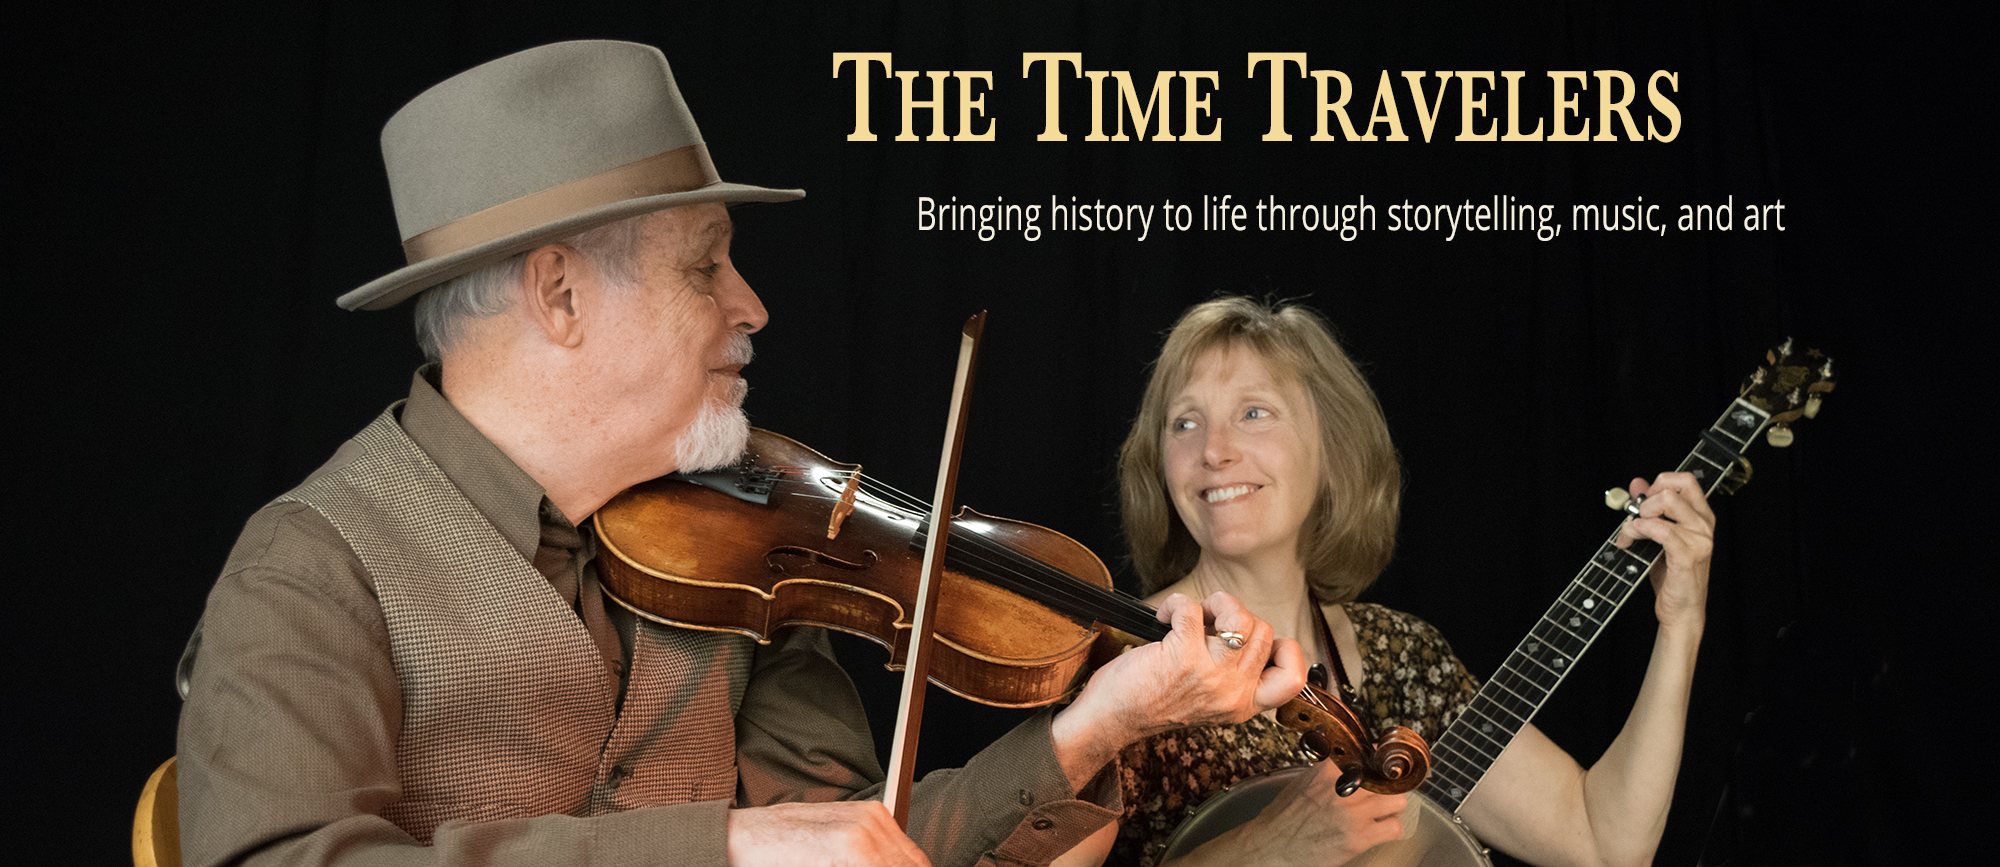 The Time Travelers Joe and Paula McHugh